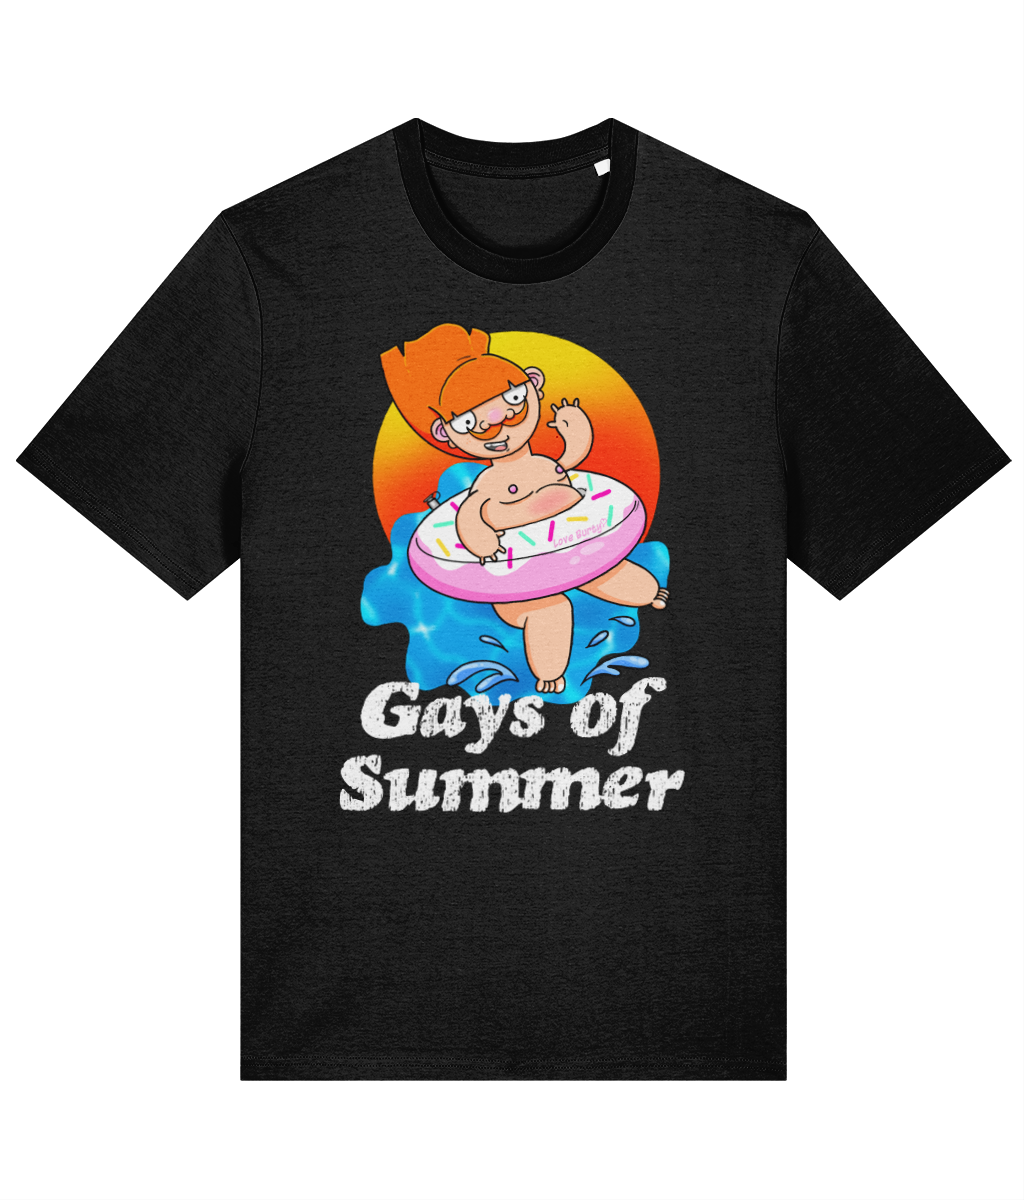 Gays of Summer Ring T-Shirt